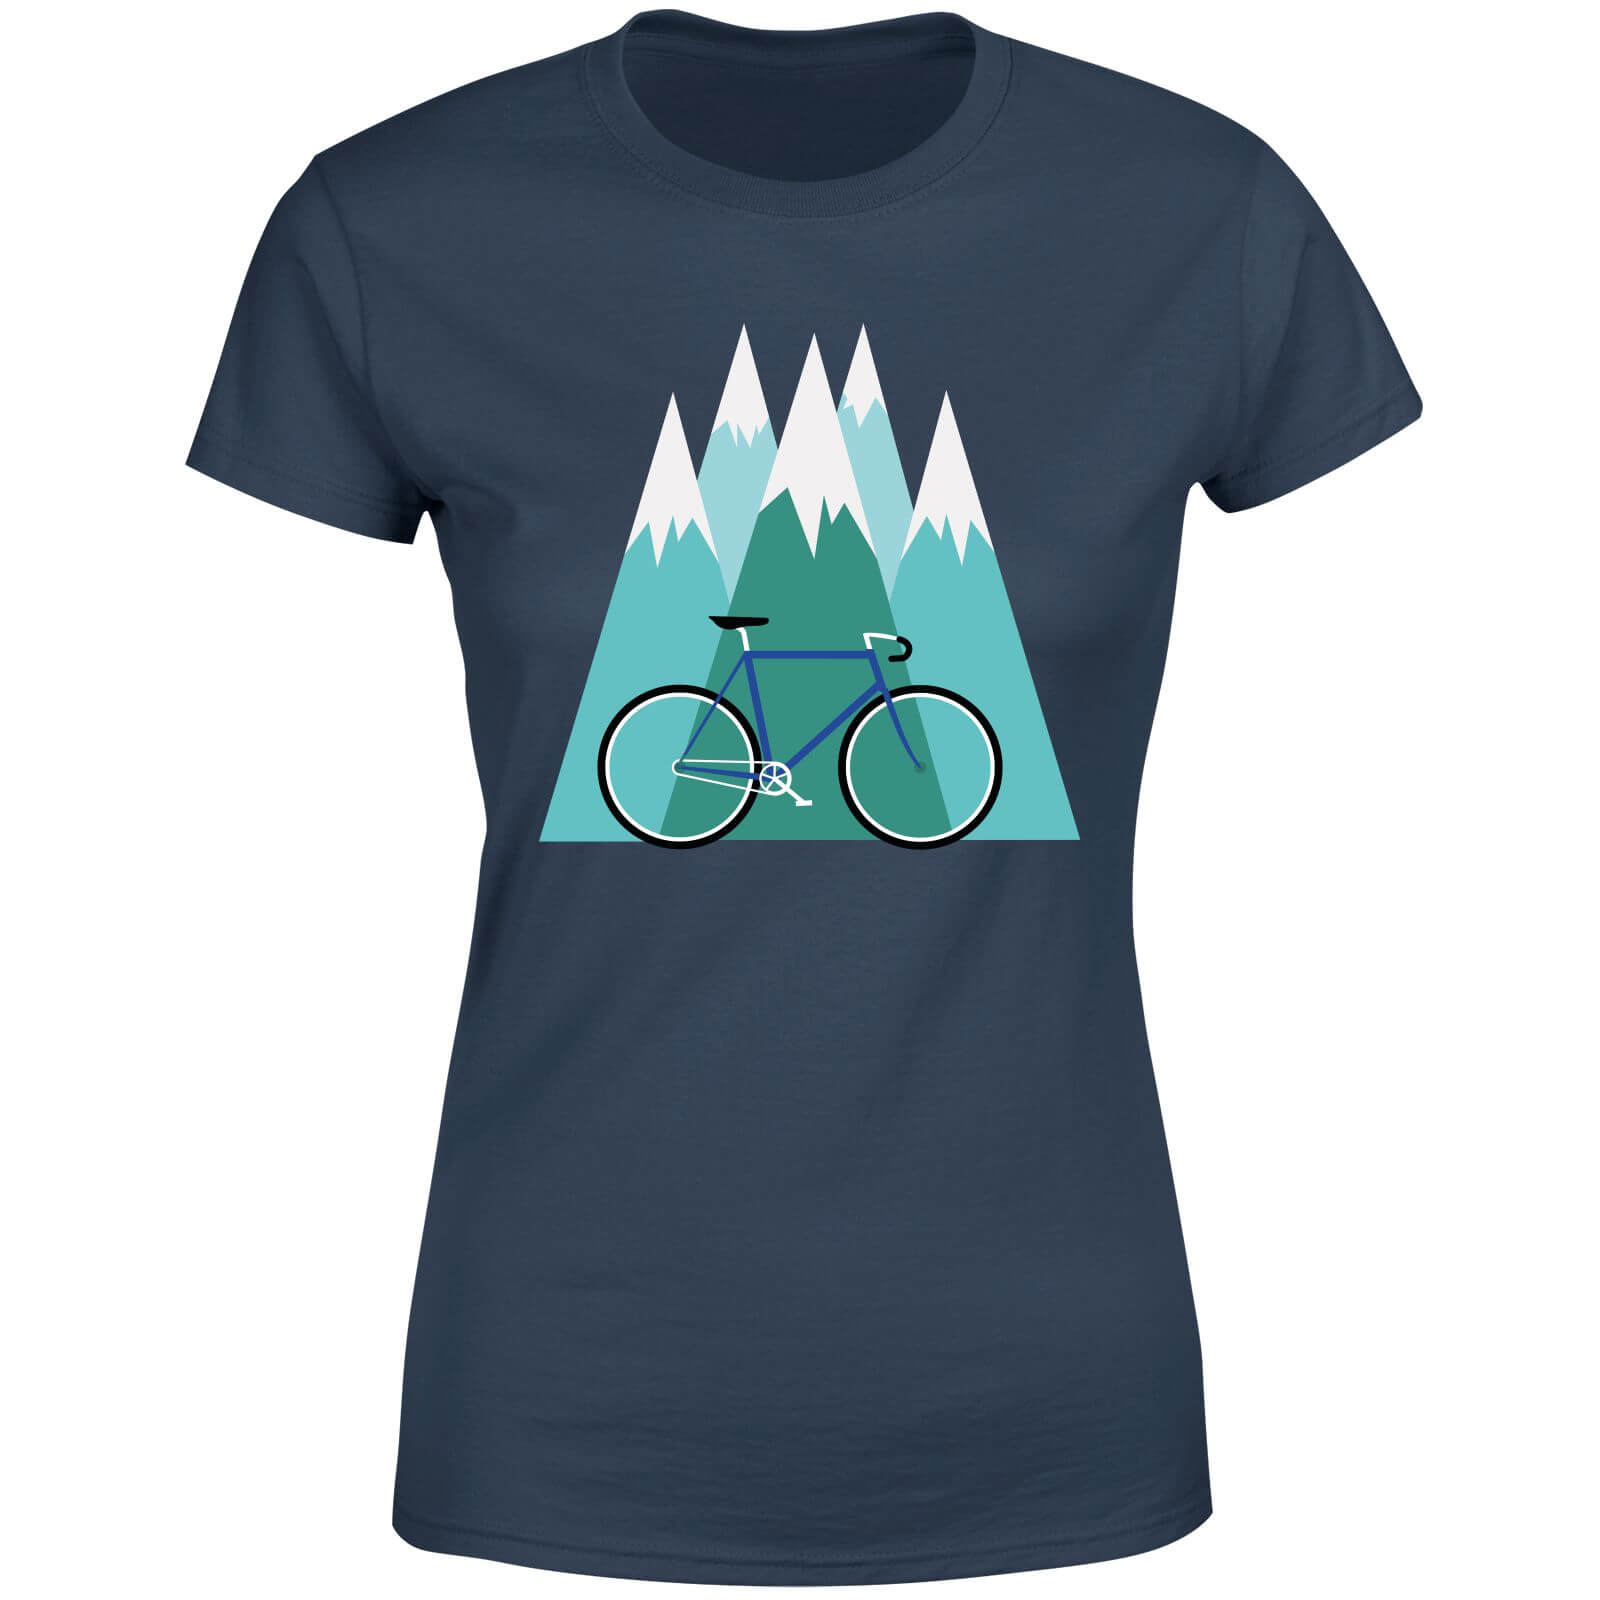 Bike and Mountains Women's Christmas T-Shirt - Navy - S